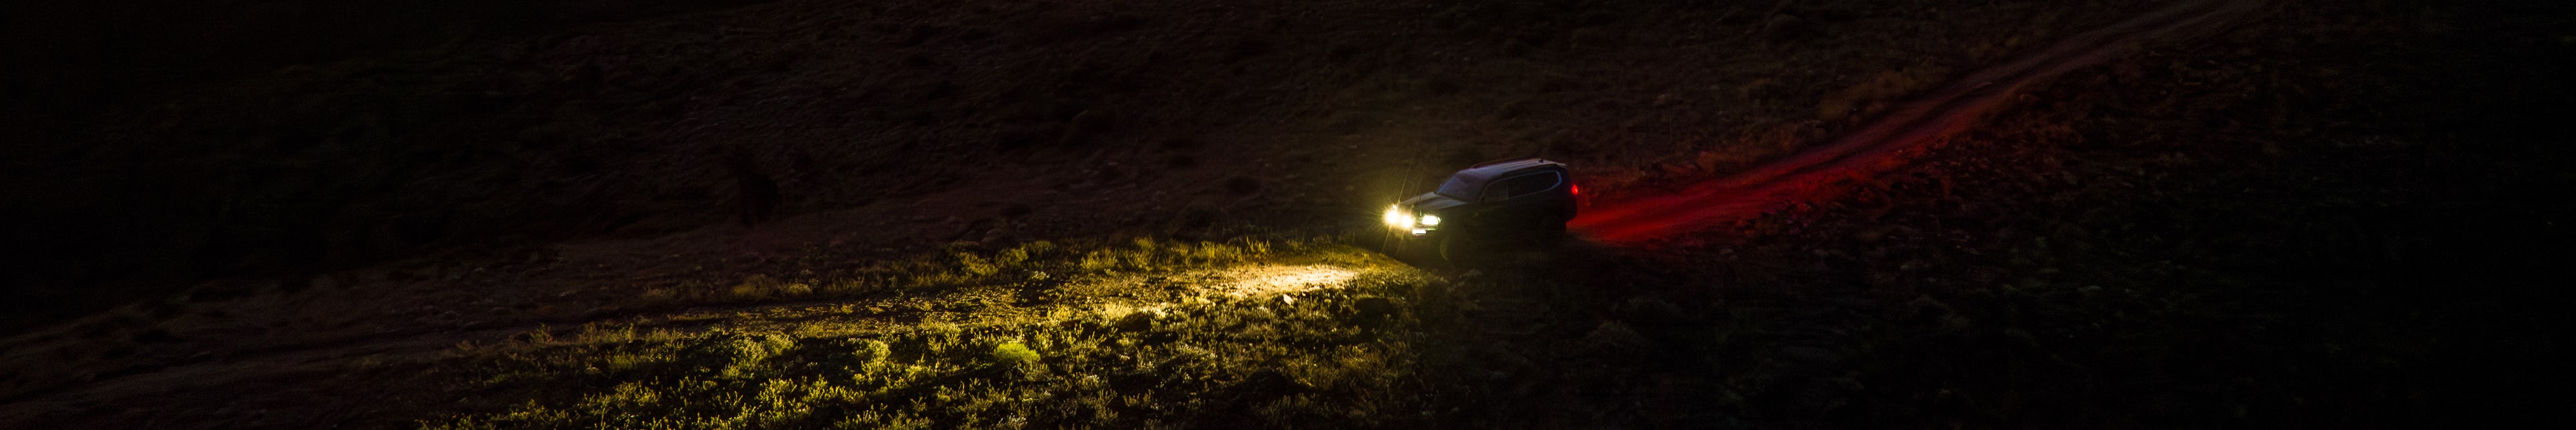 Landcruiser driving offroad at nighttime